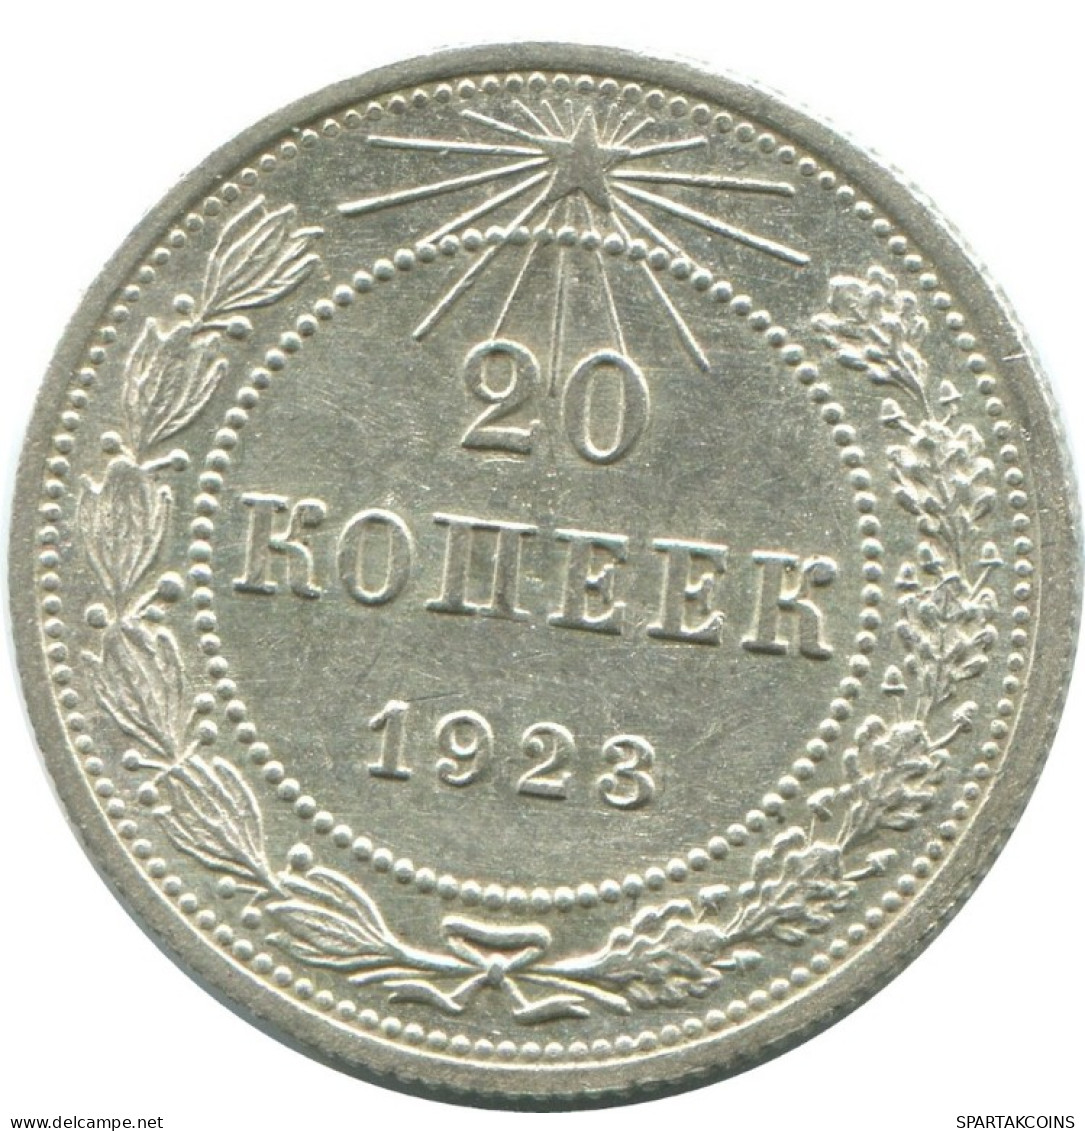 20 KOPEKS 1923 RUSSIA RSFSR SILVER Coin HIGH GRADE #AF666.U.A - Russie